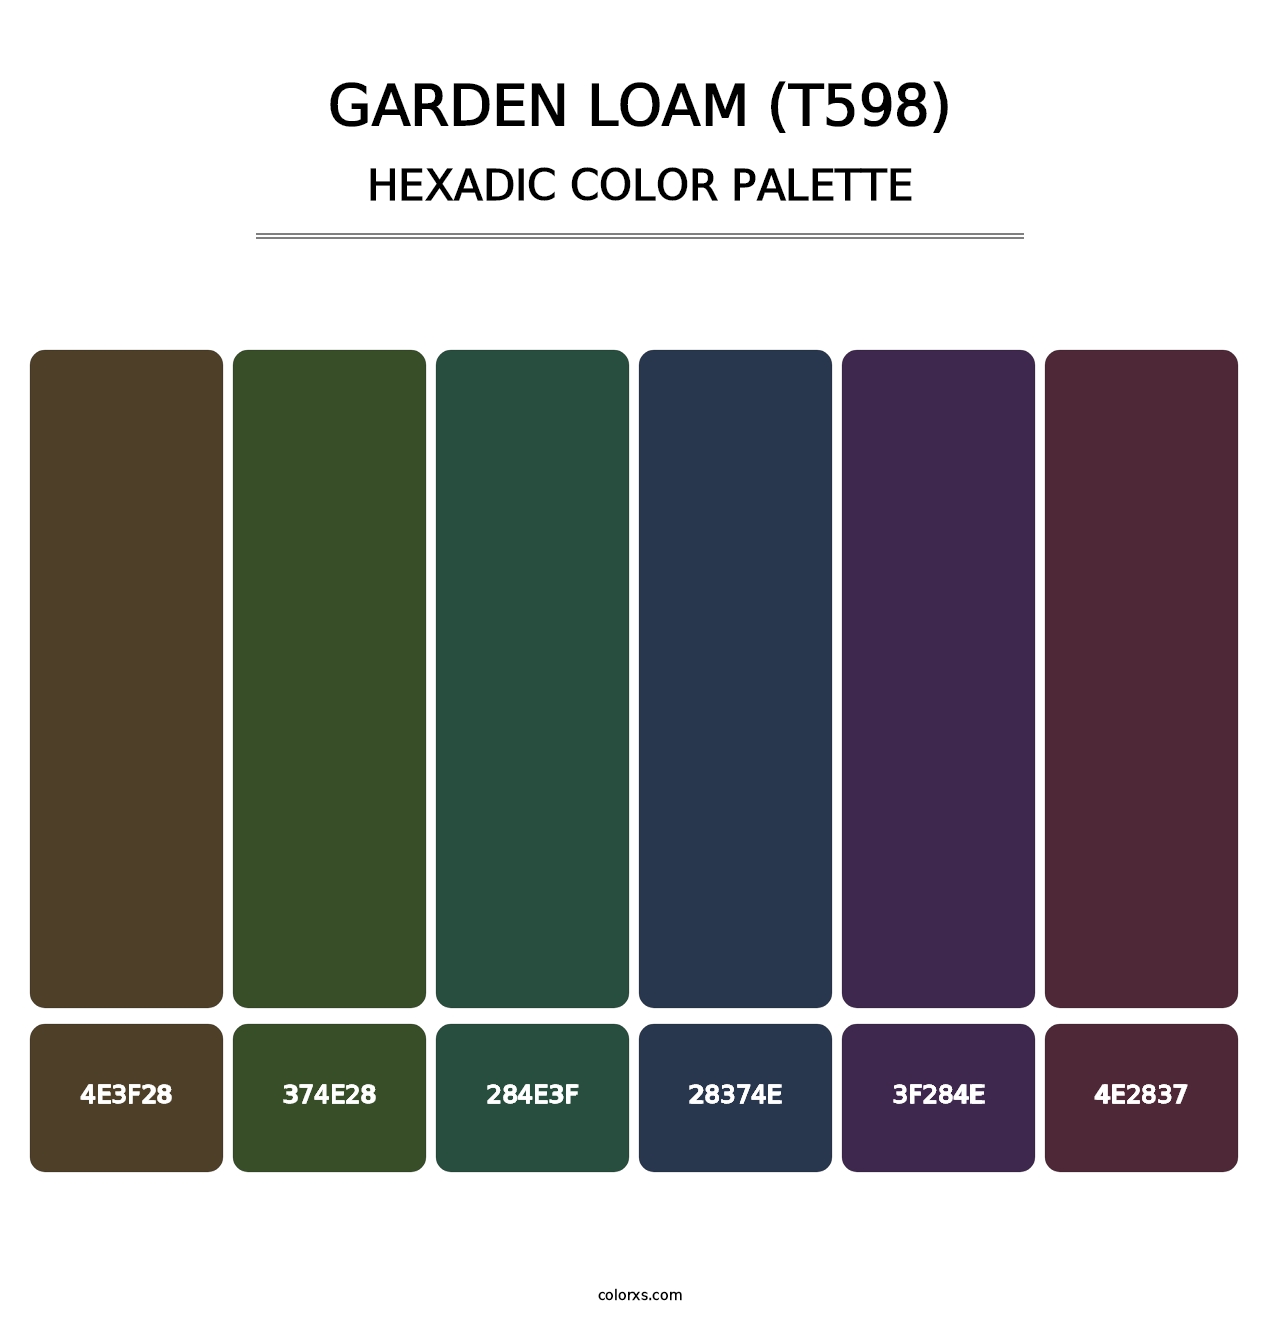 Garden Loam (T598) - Hexadic Color Palette